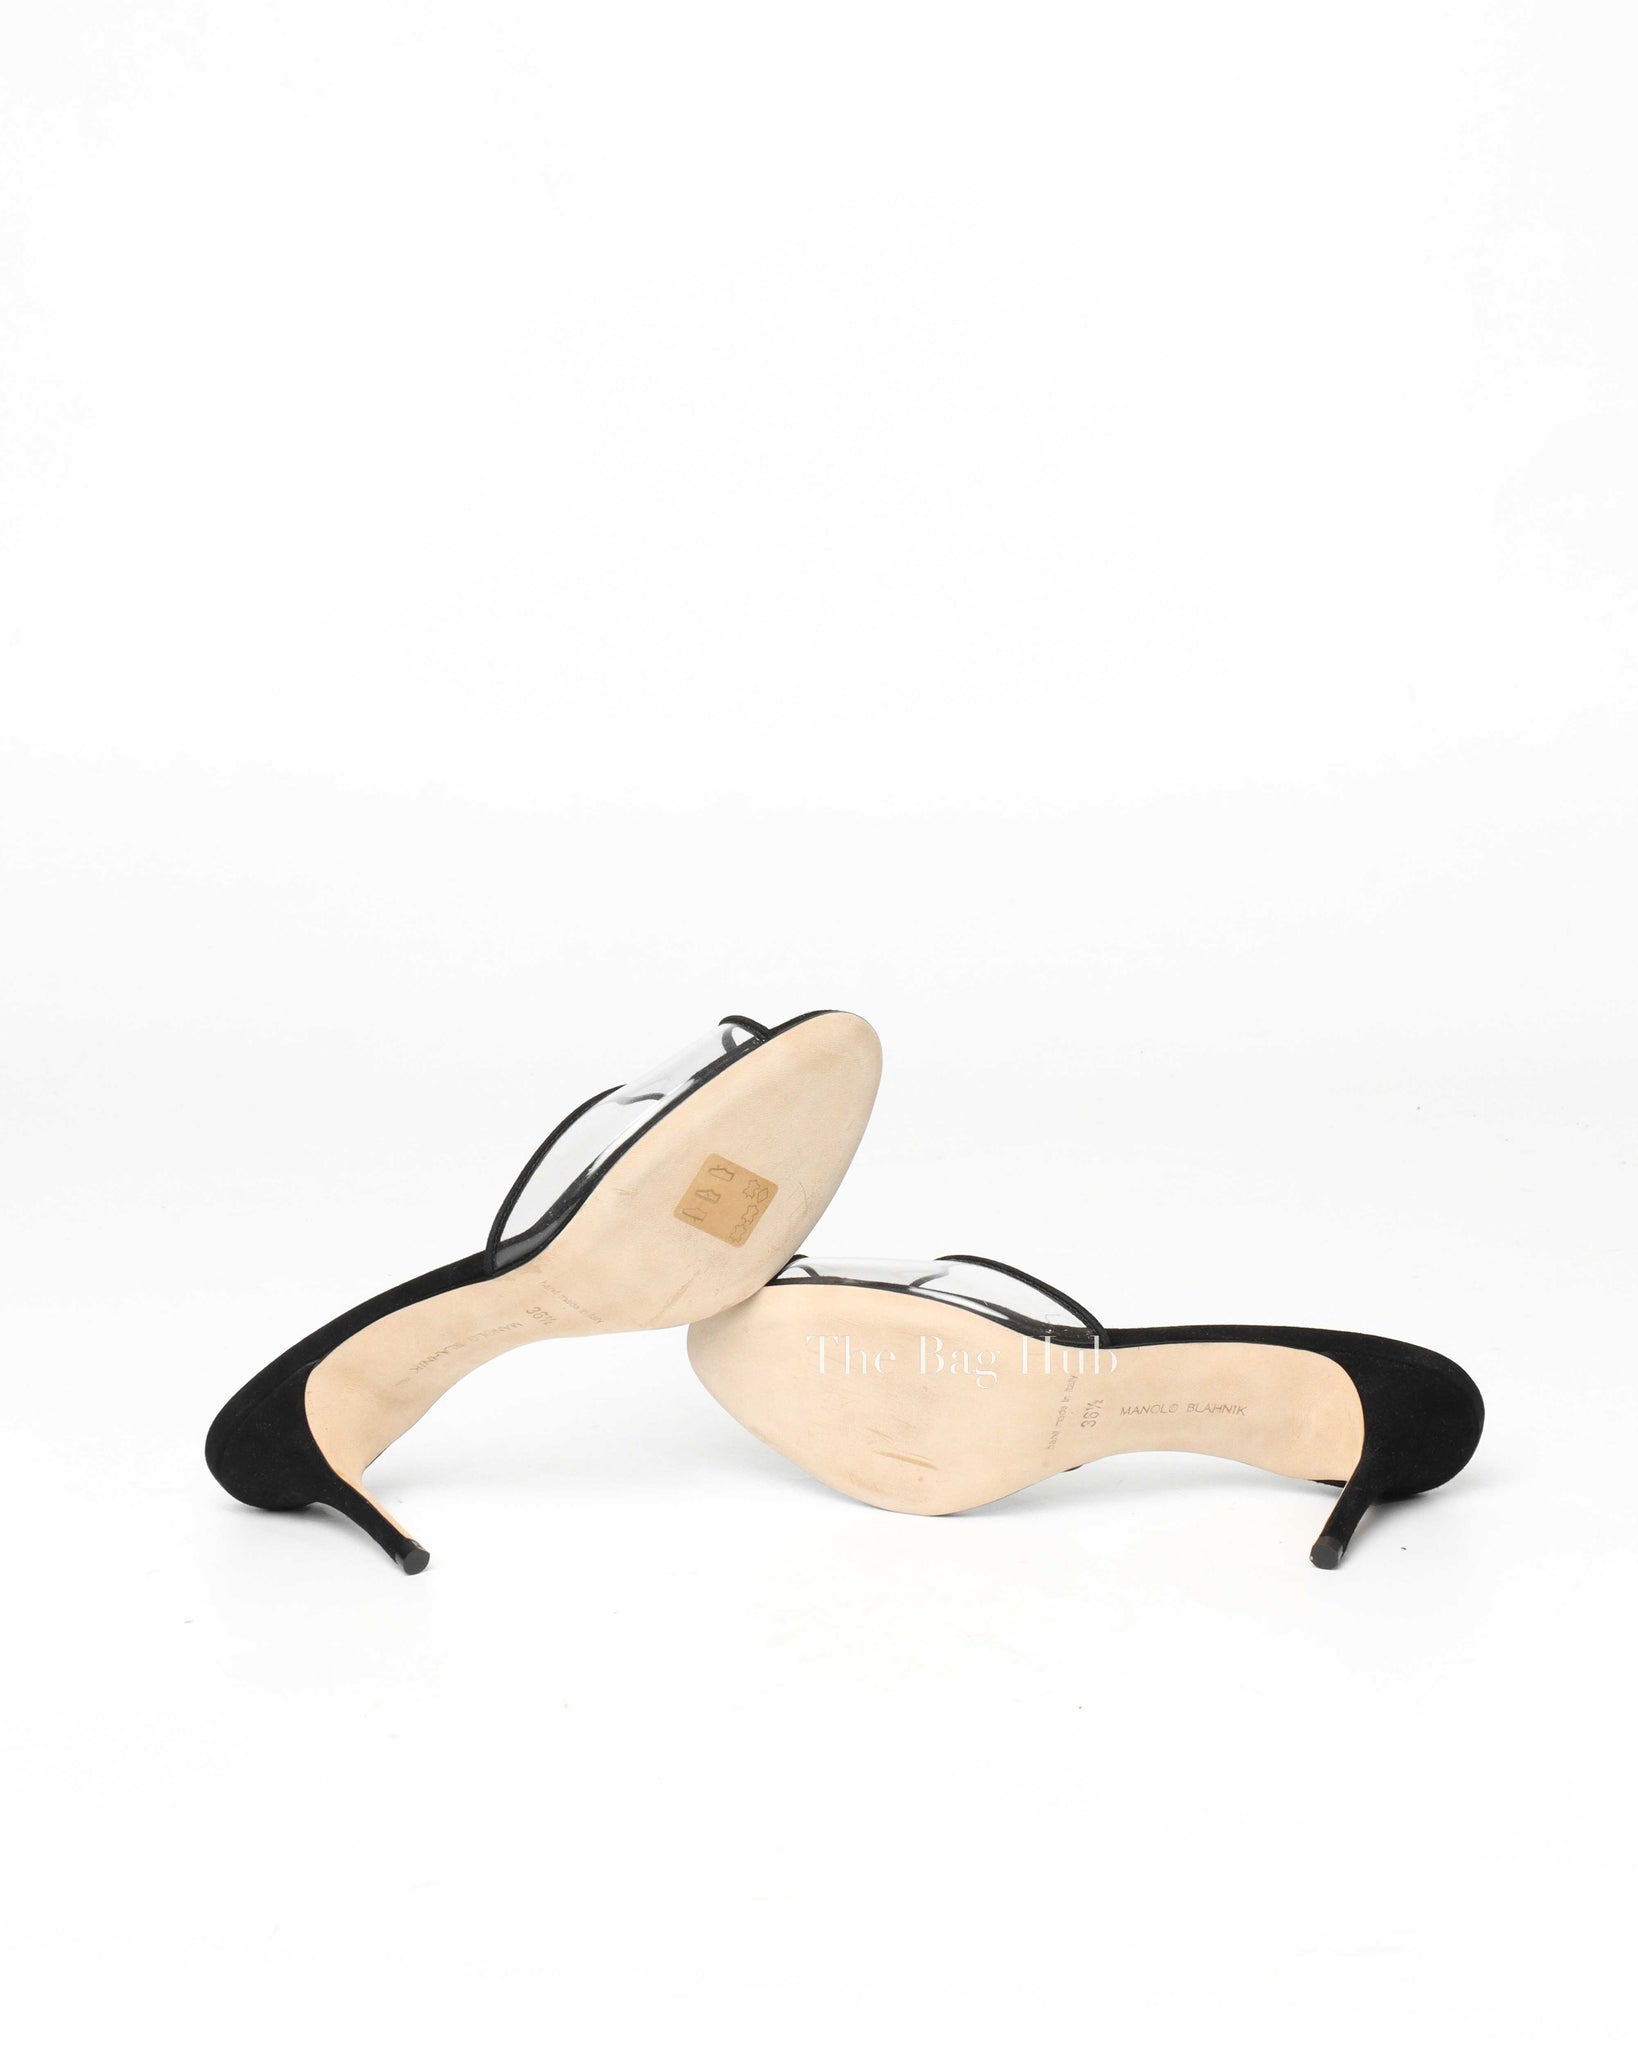 Manolo Blahnik Black Suede Sandals Size 36.5-8